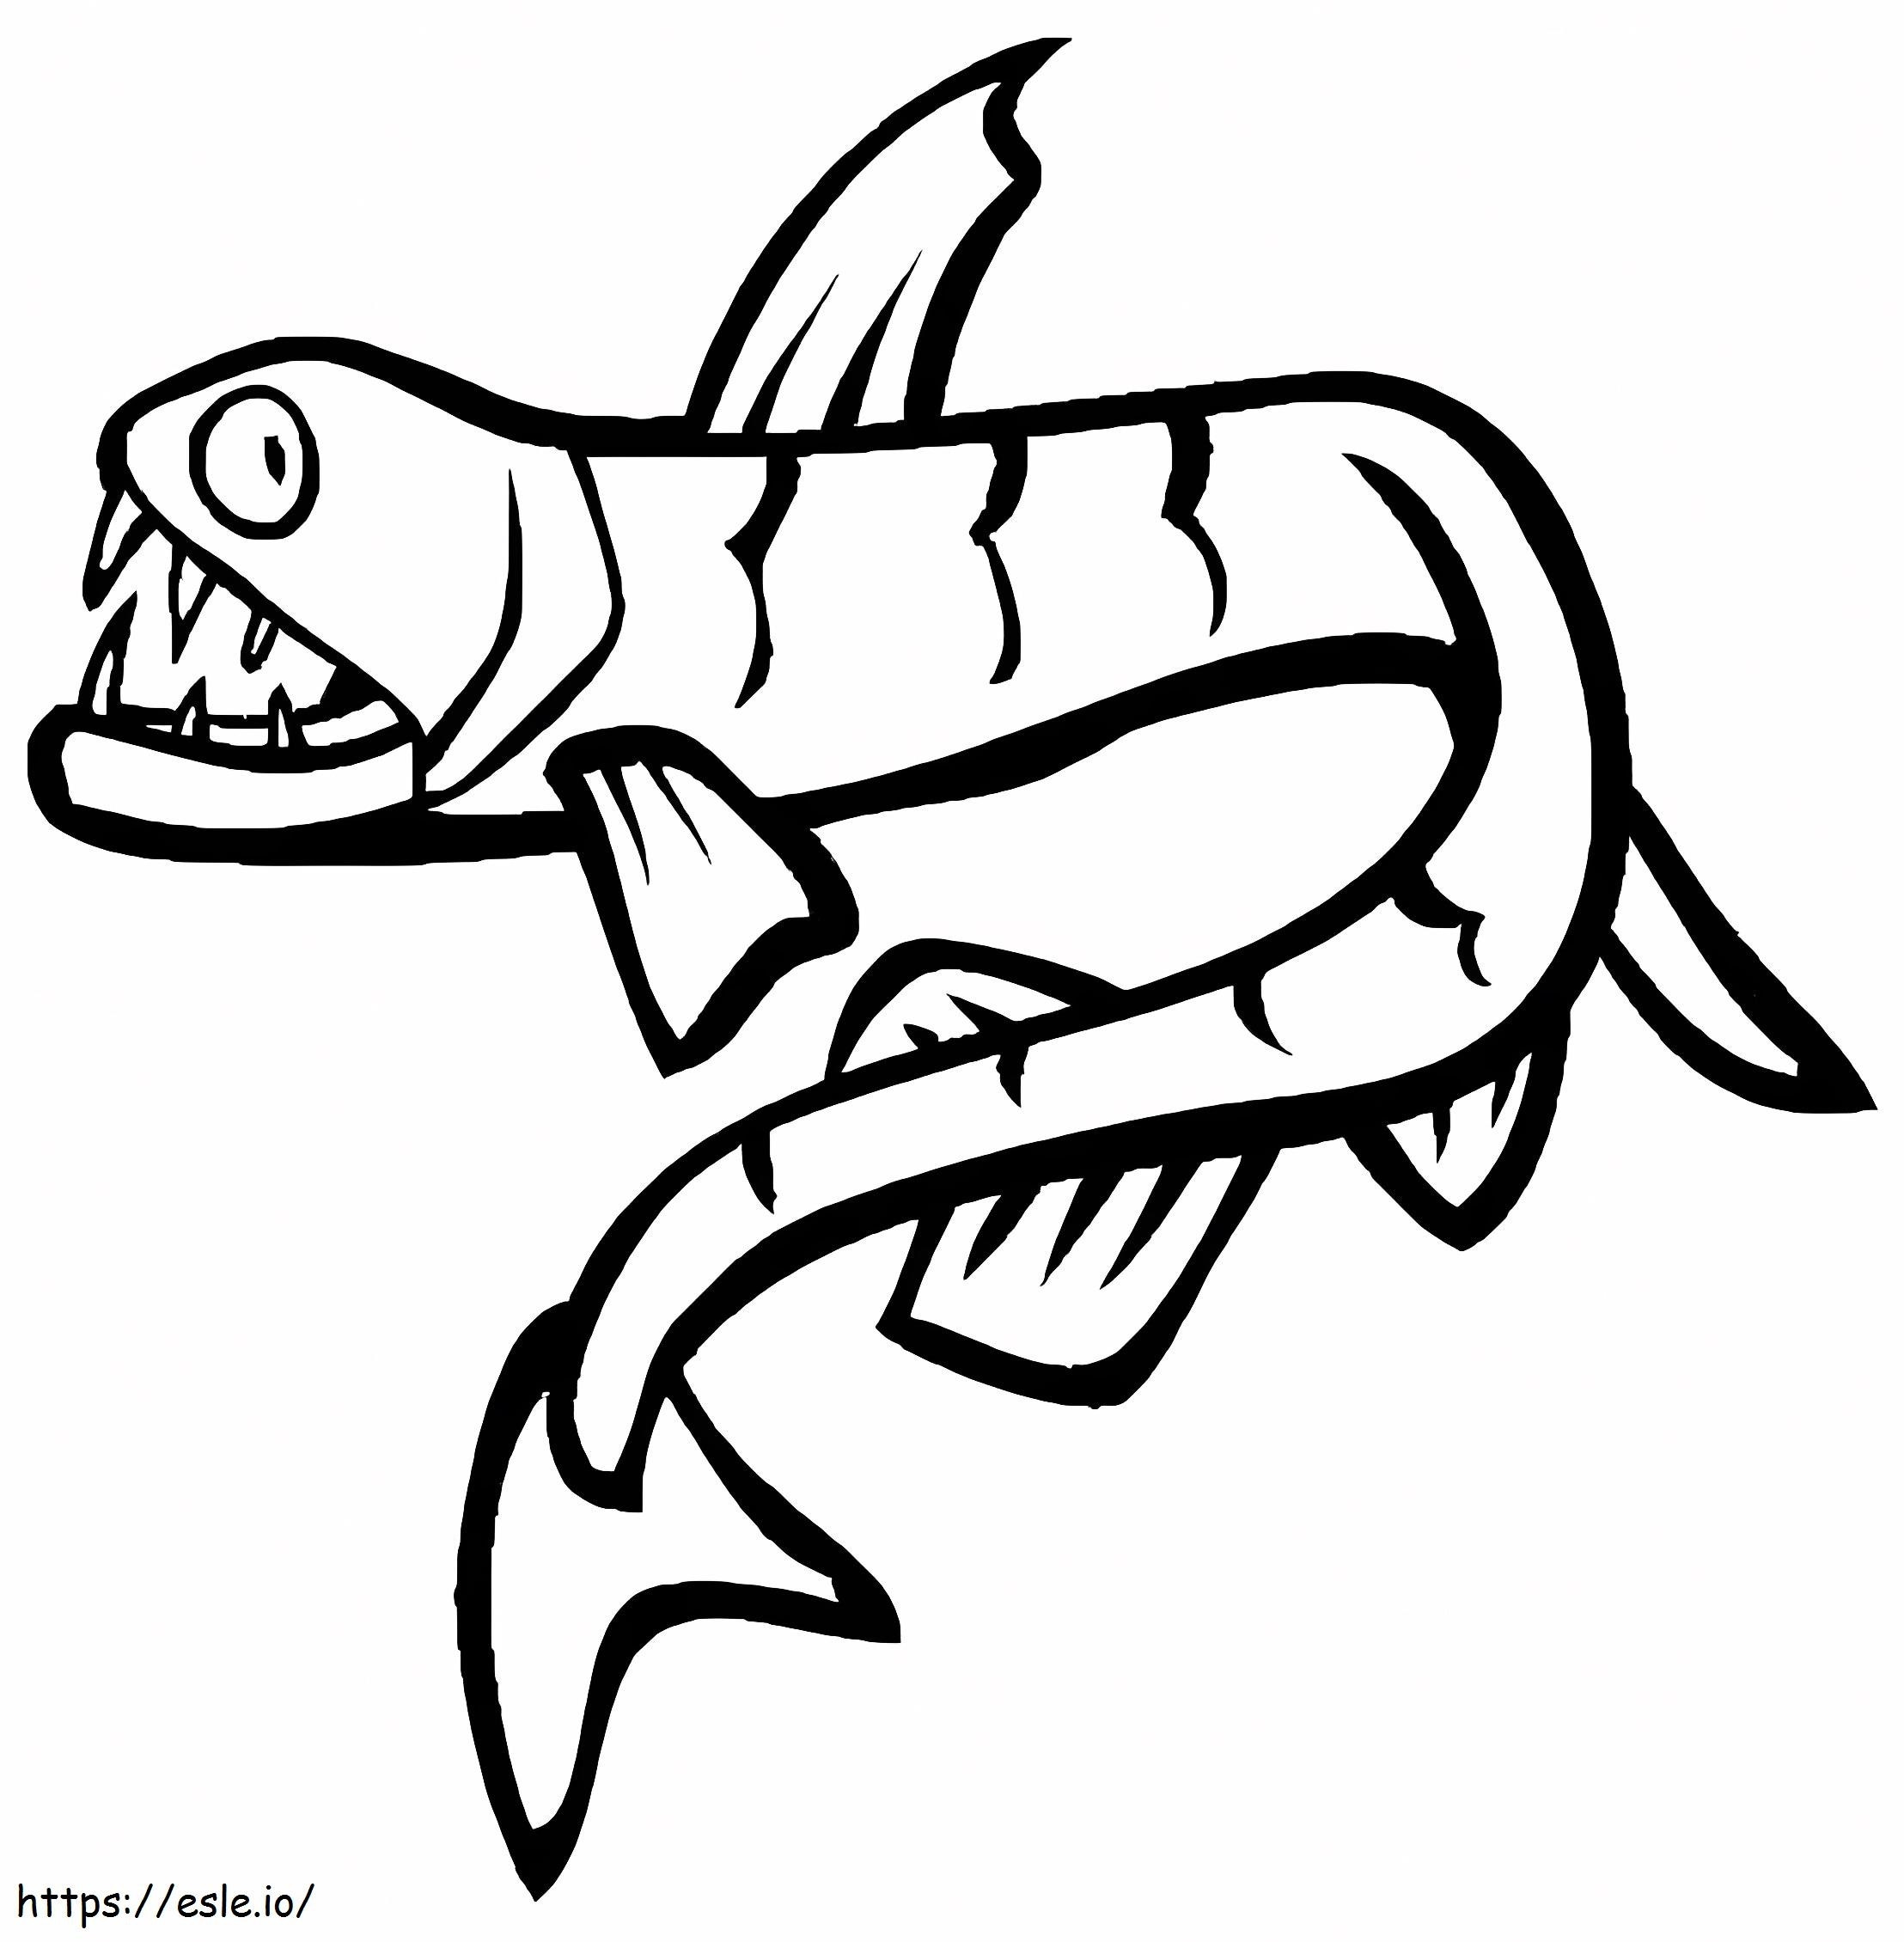 Viperfish grátis para colorir